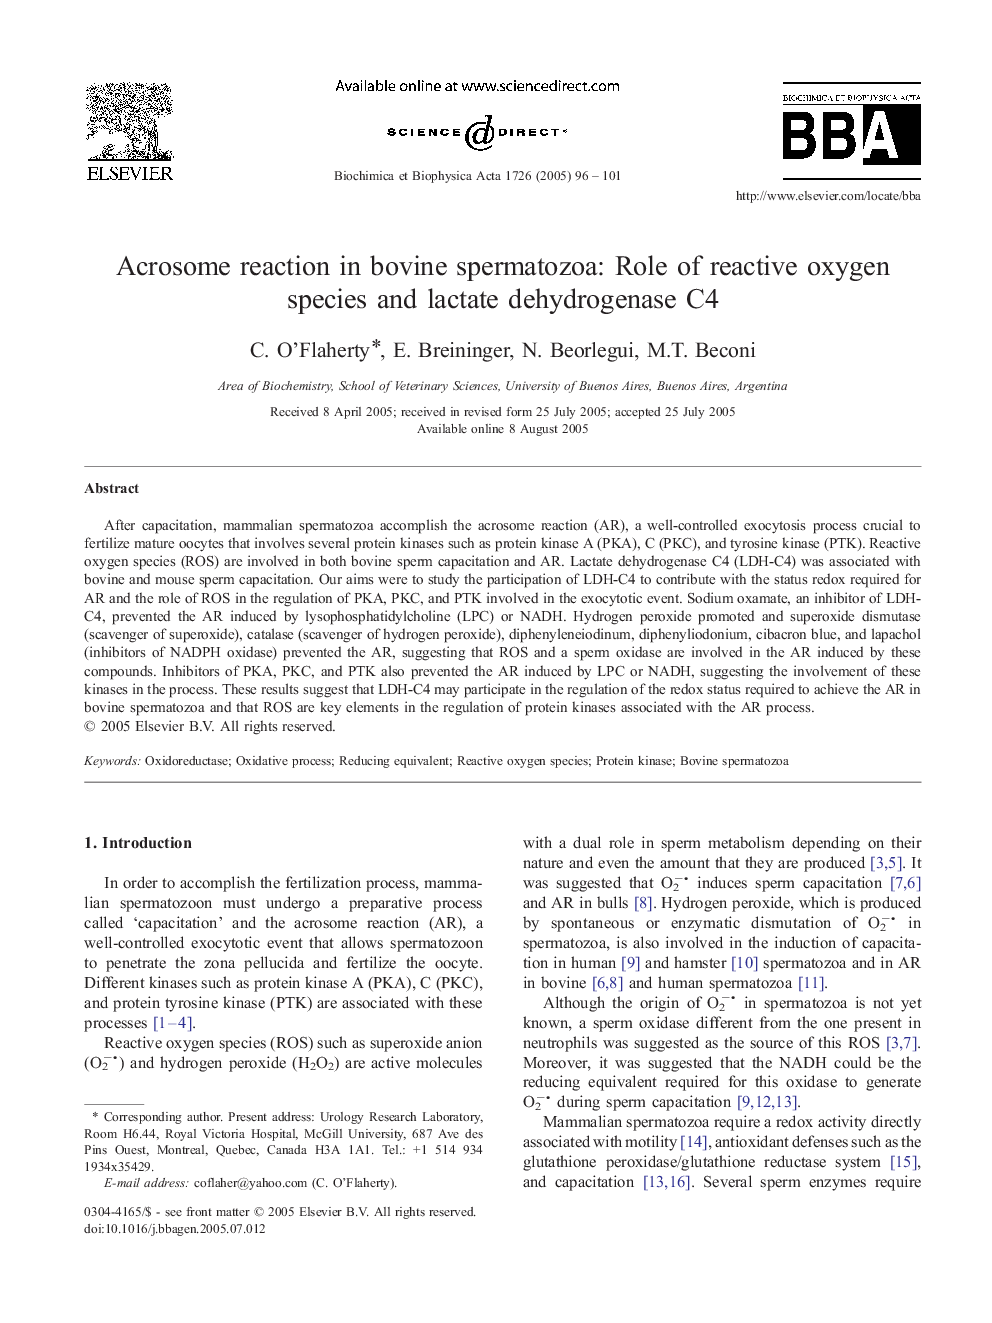 Acrosome reaction in bovine spermatozoa: Role of reactive oxygen species and lactate dehydrogenase C4